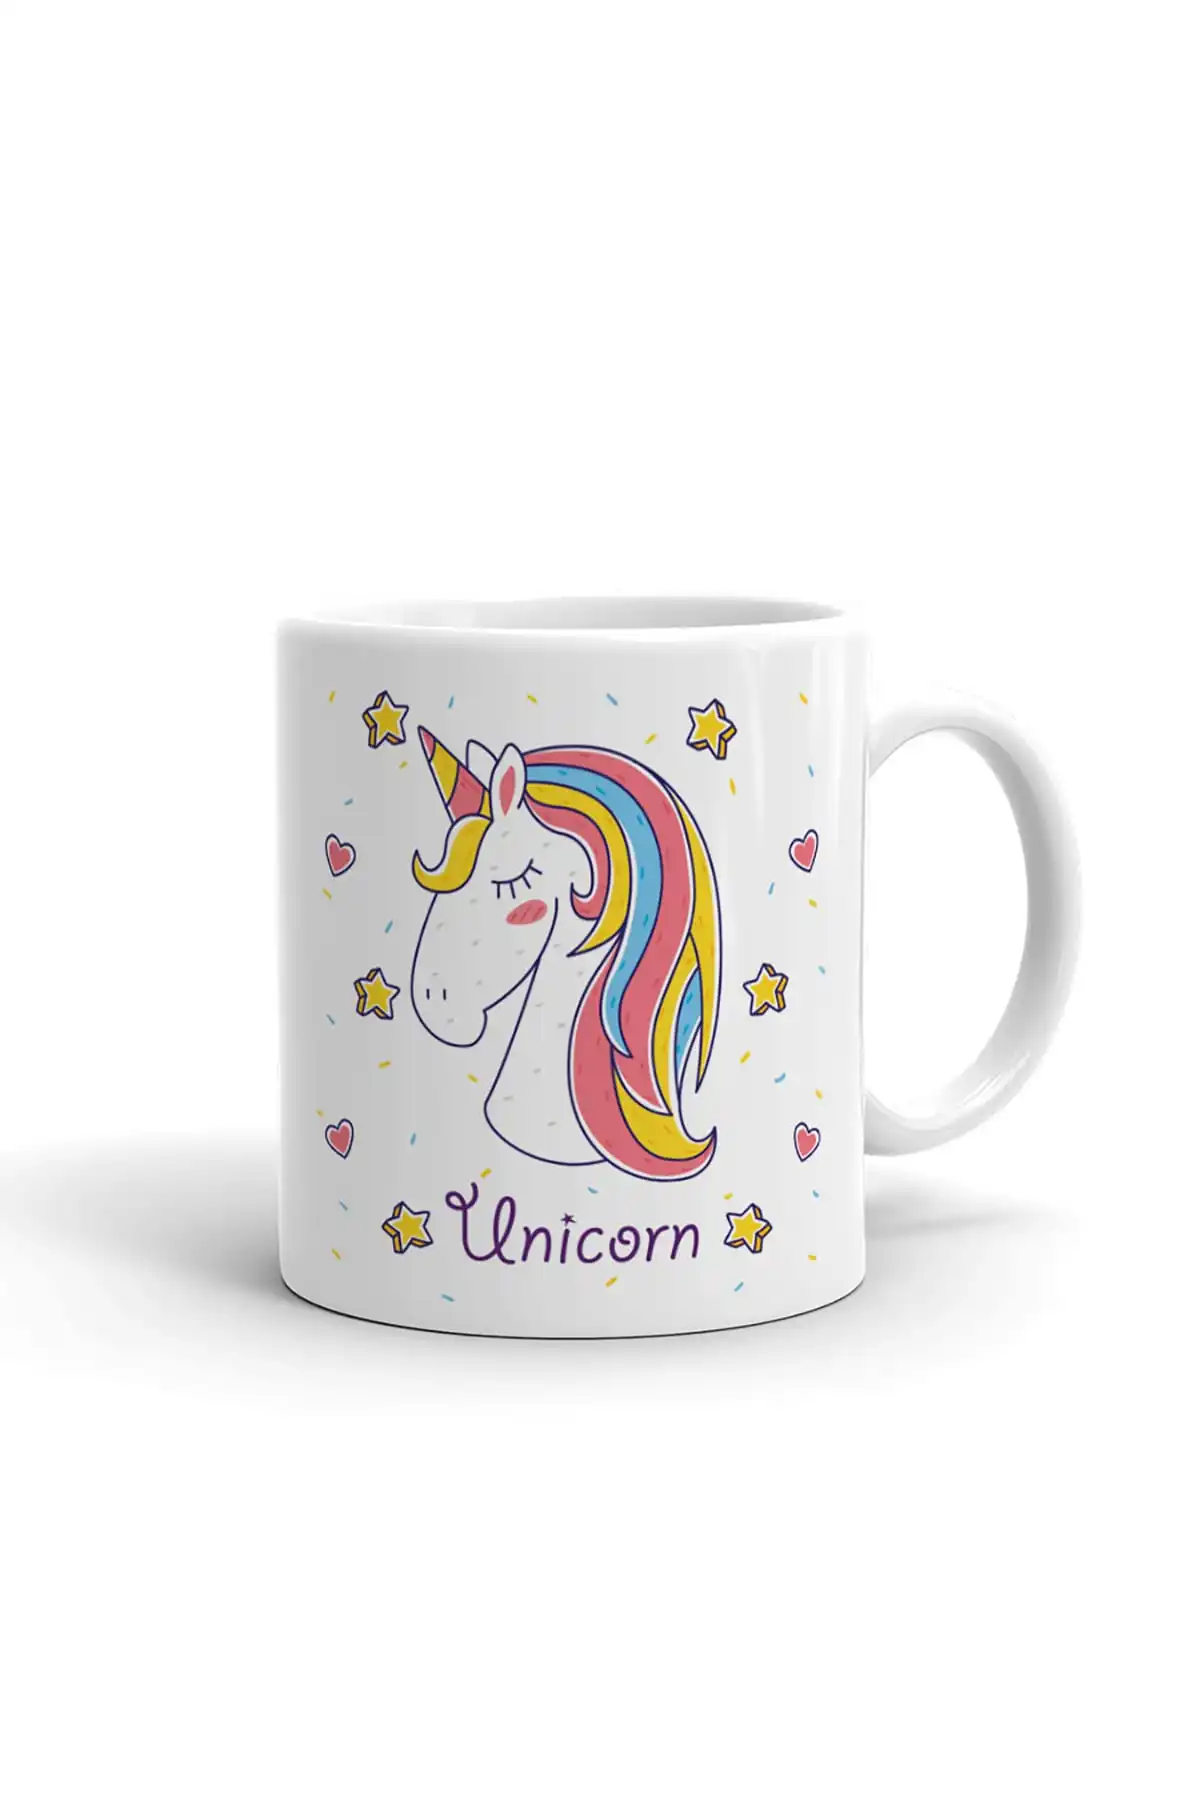 

Unicorn Design Ceramic Mug Cup Porcelain Coffee Mugs Tea Cups Hot Drinks Gift Items